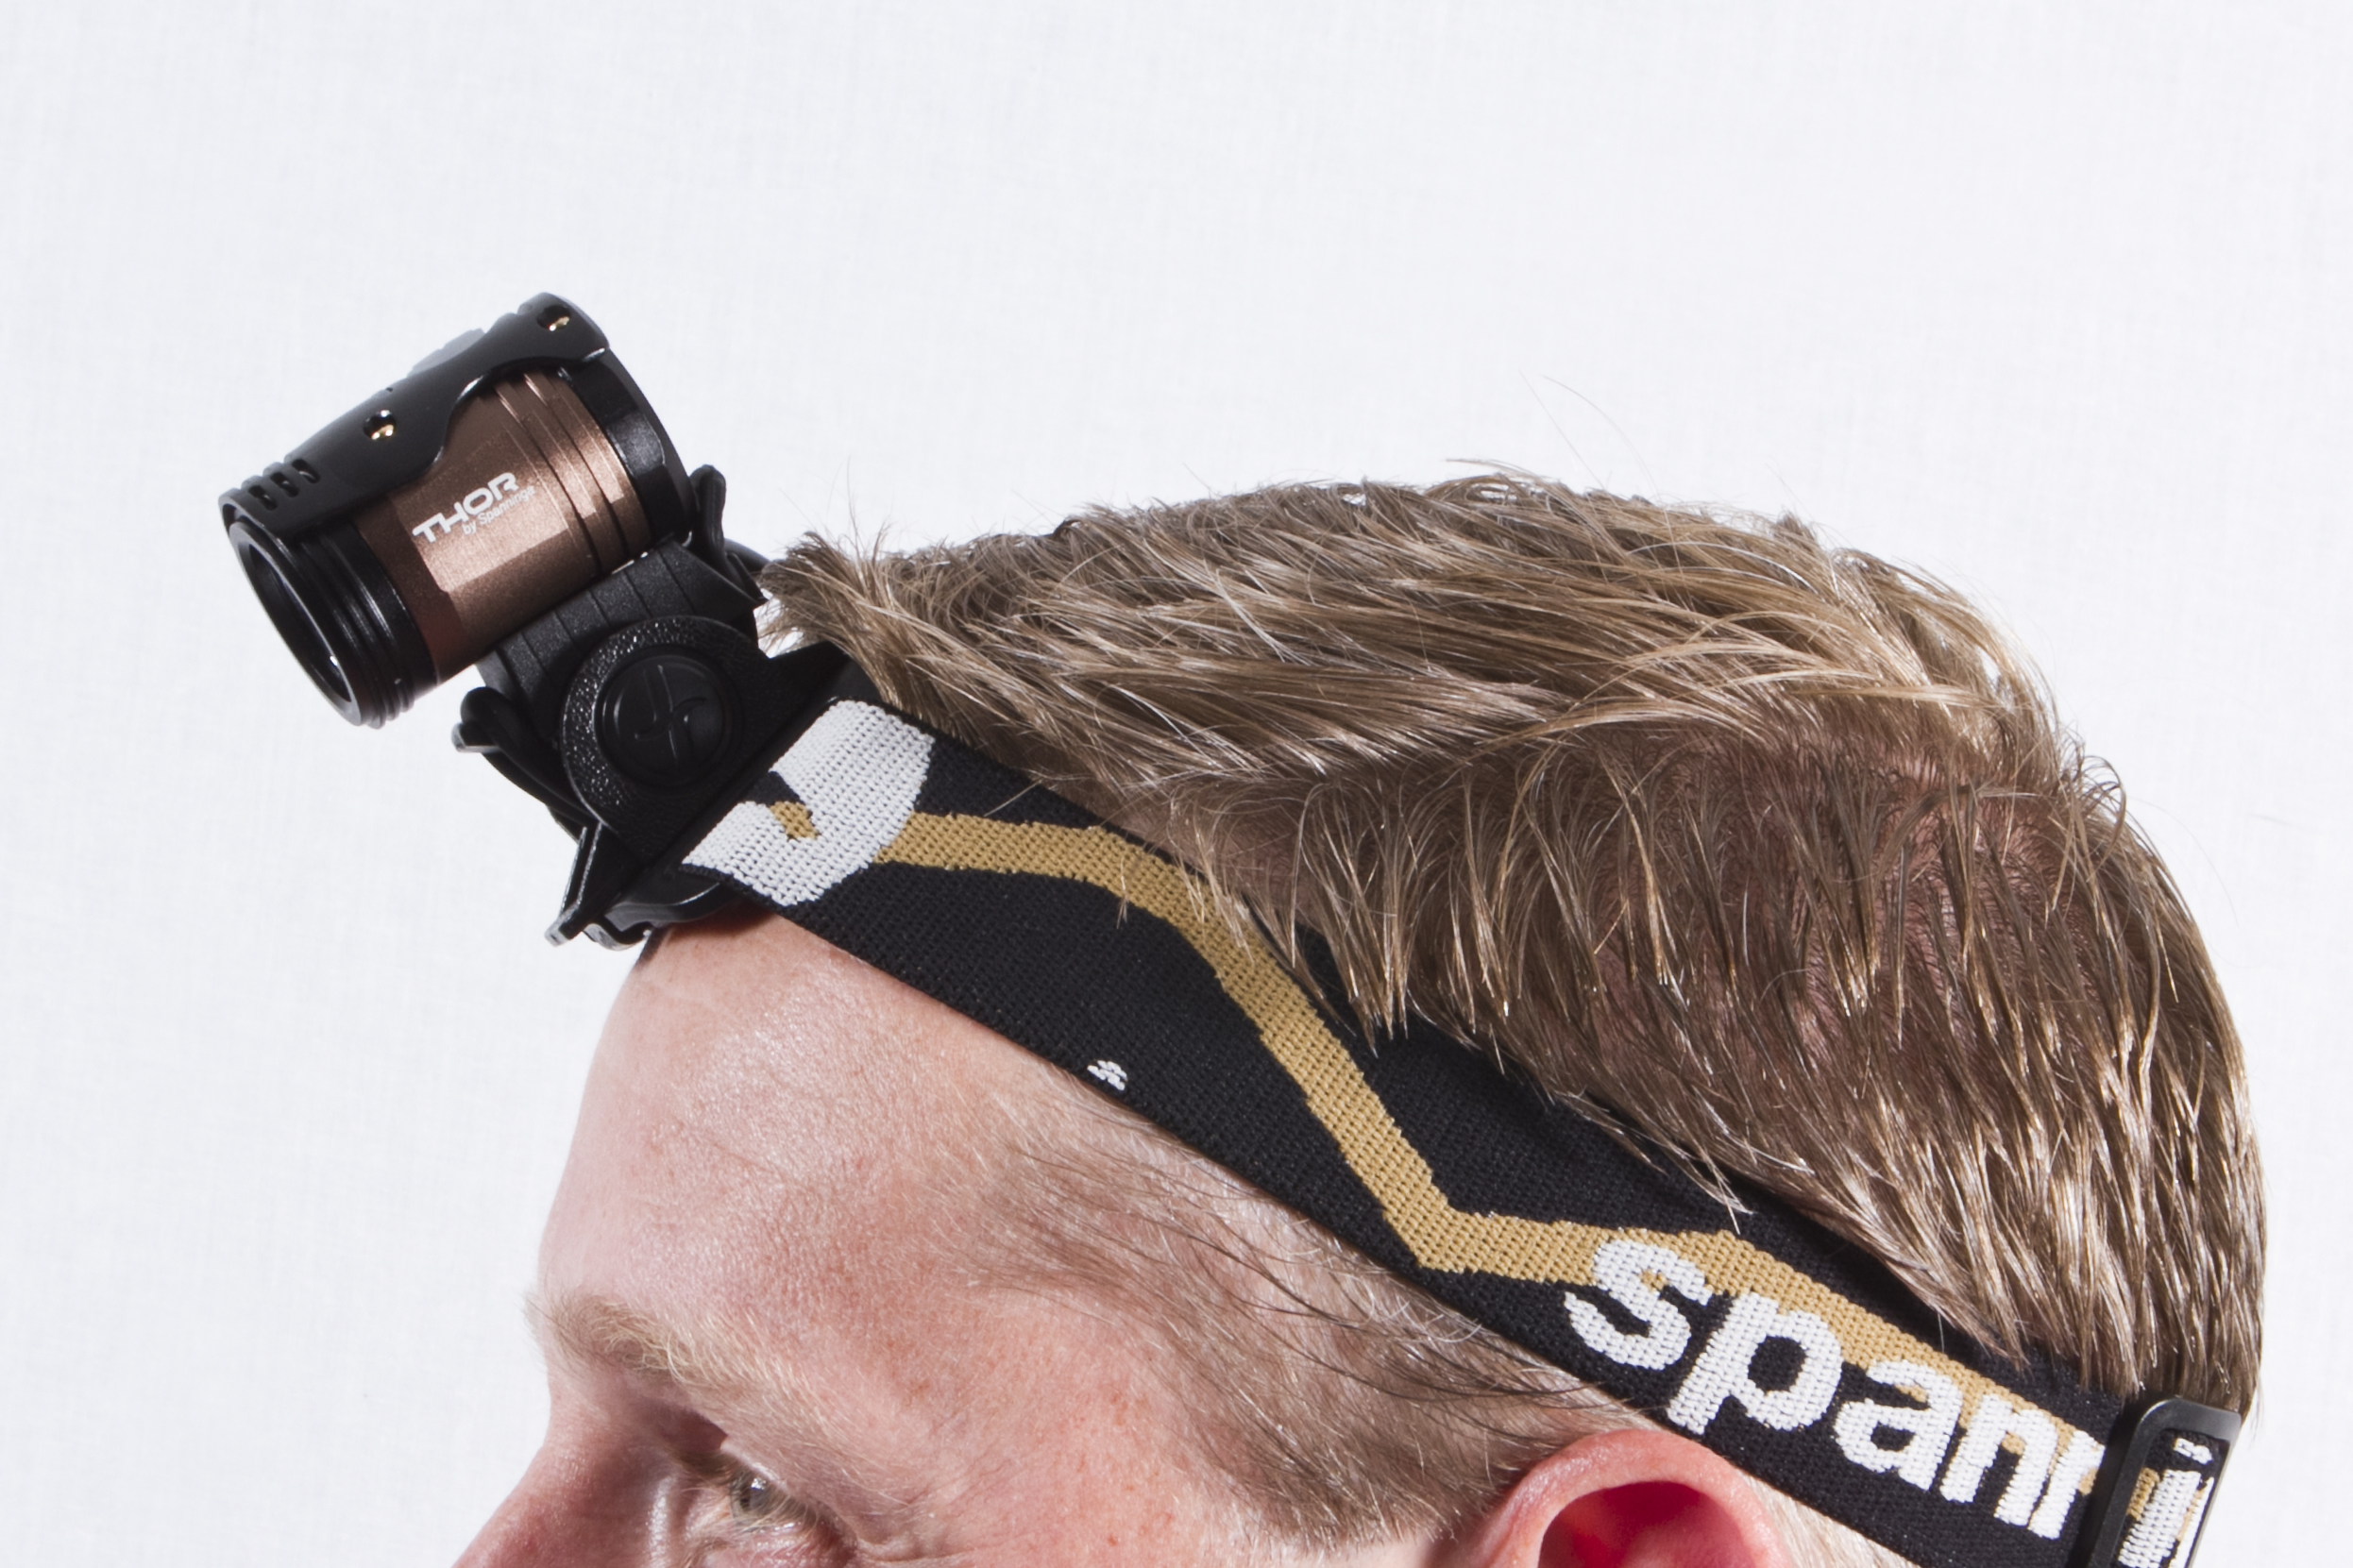 Thor 1100 on headband with adaptor